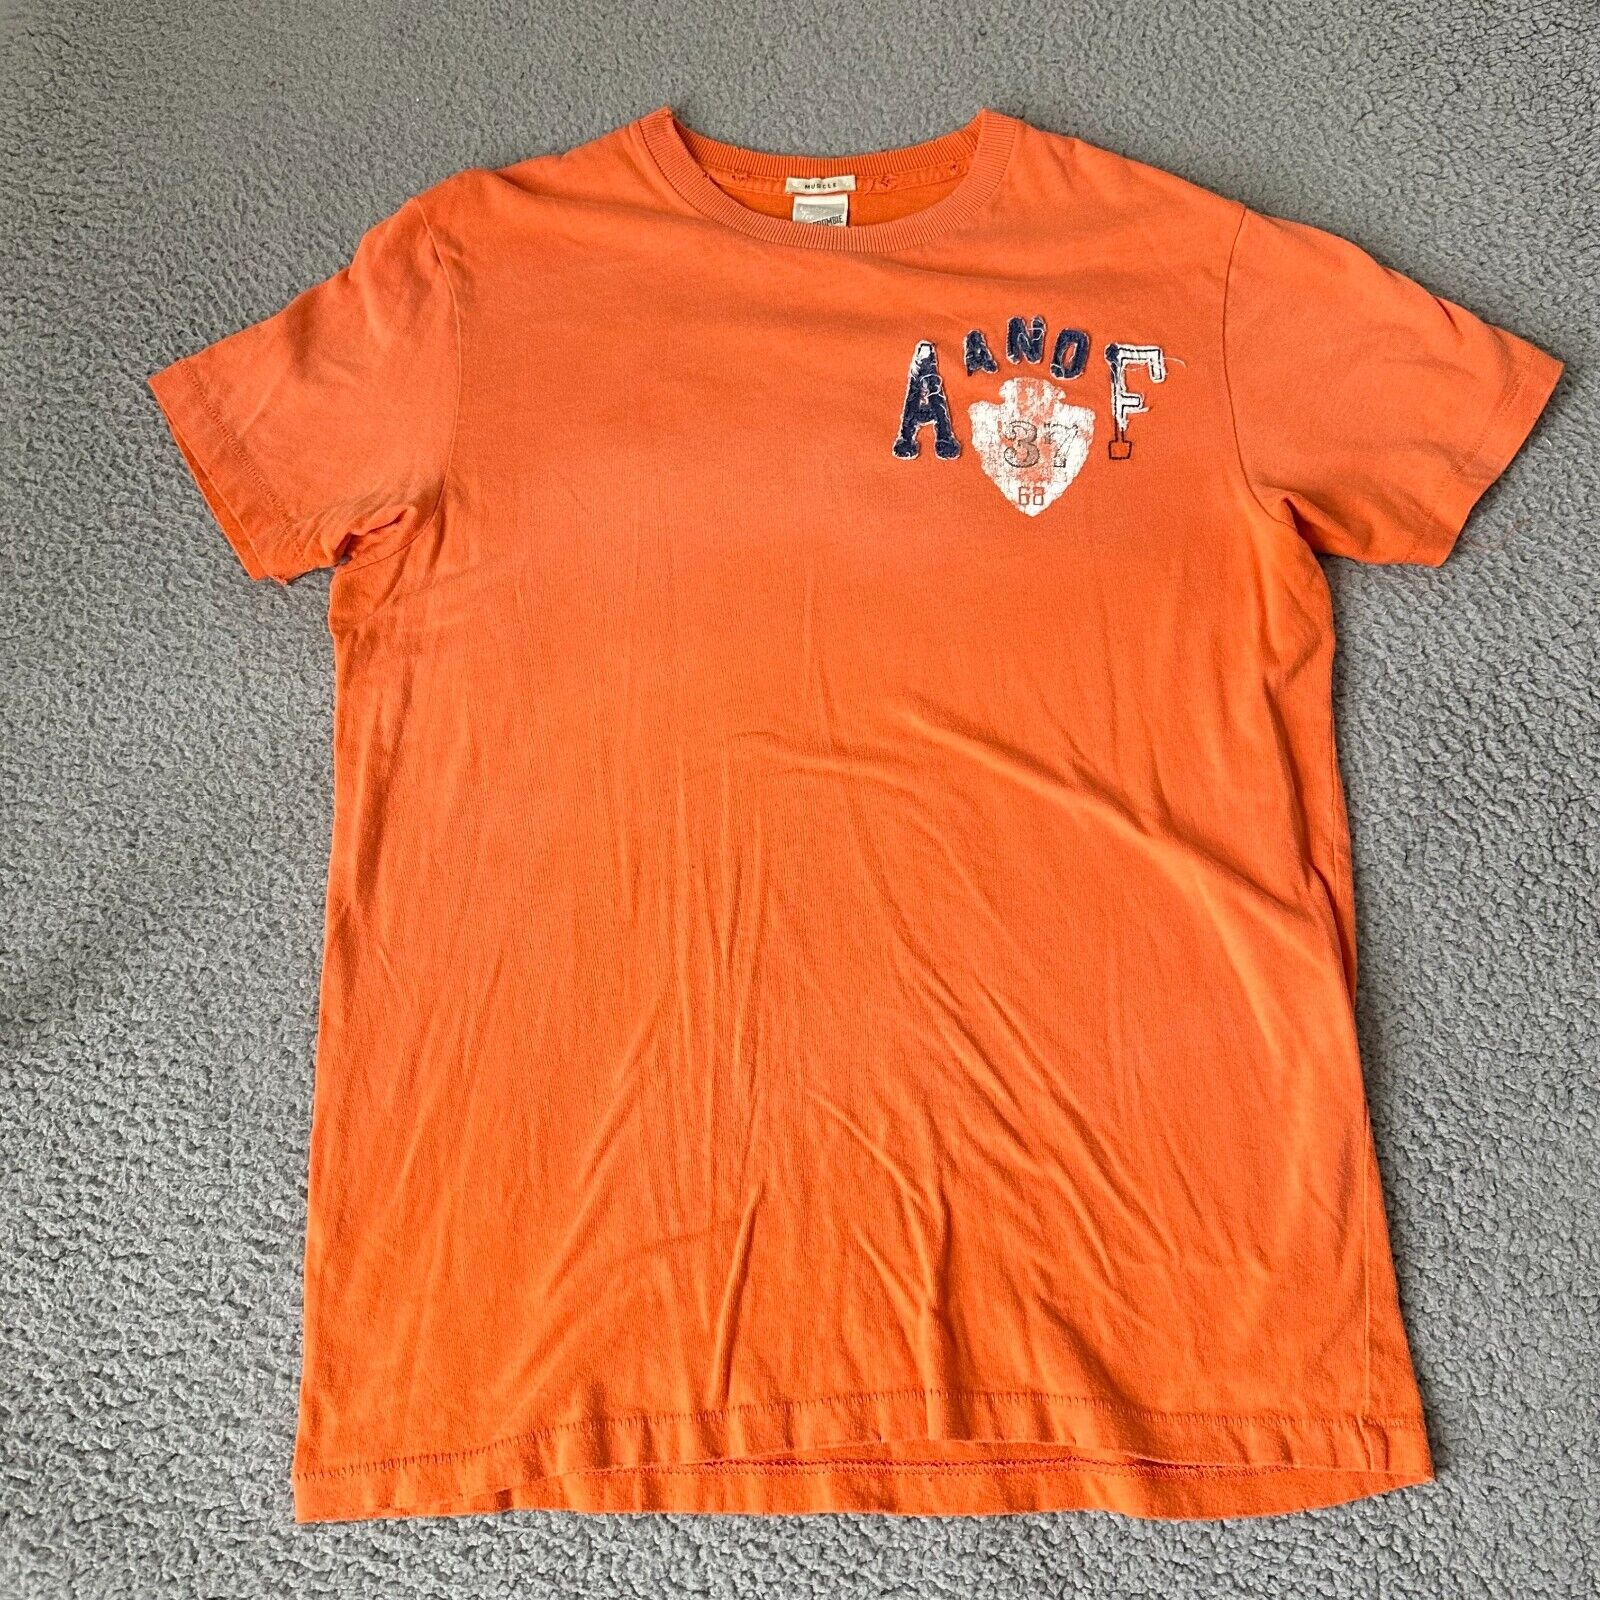 Vintage Abercrombie & Fitch Shirt Adult Extra Large XL Orange Moose Logo Mens